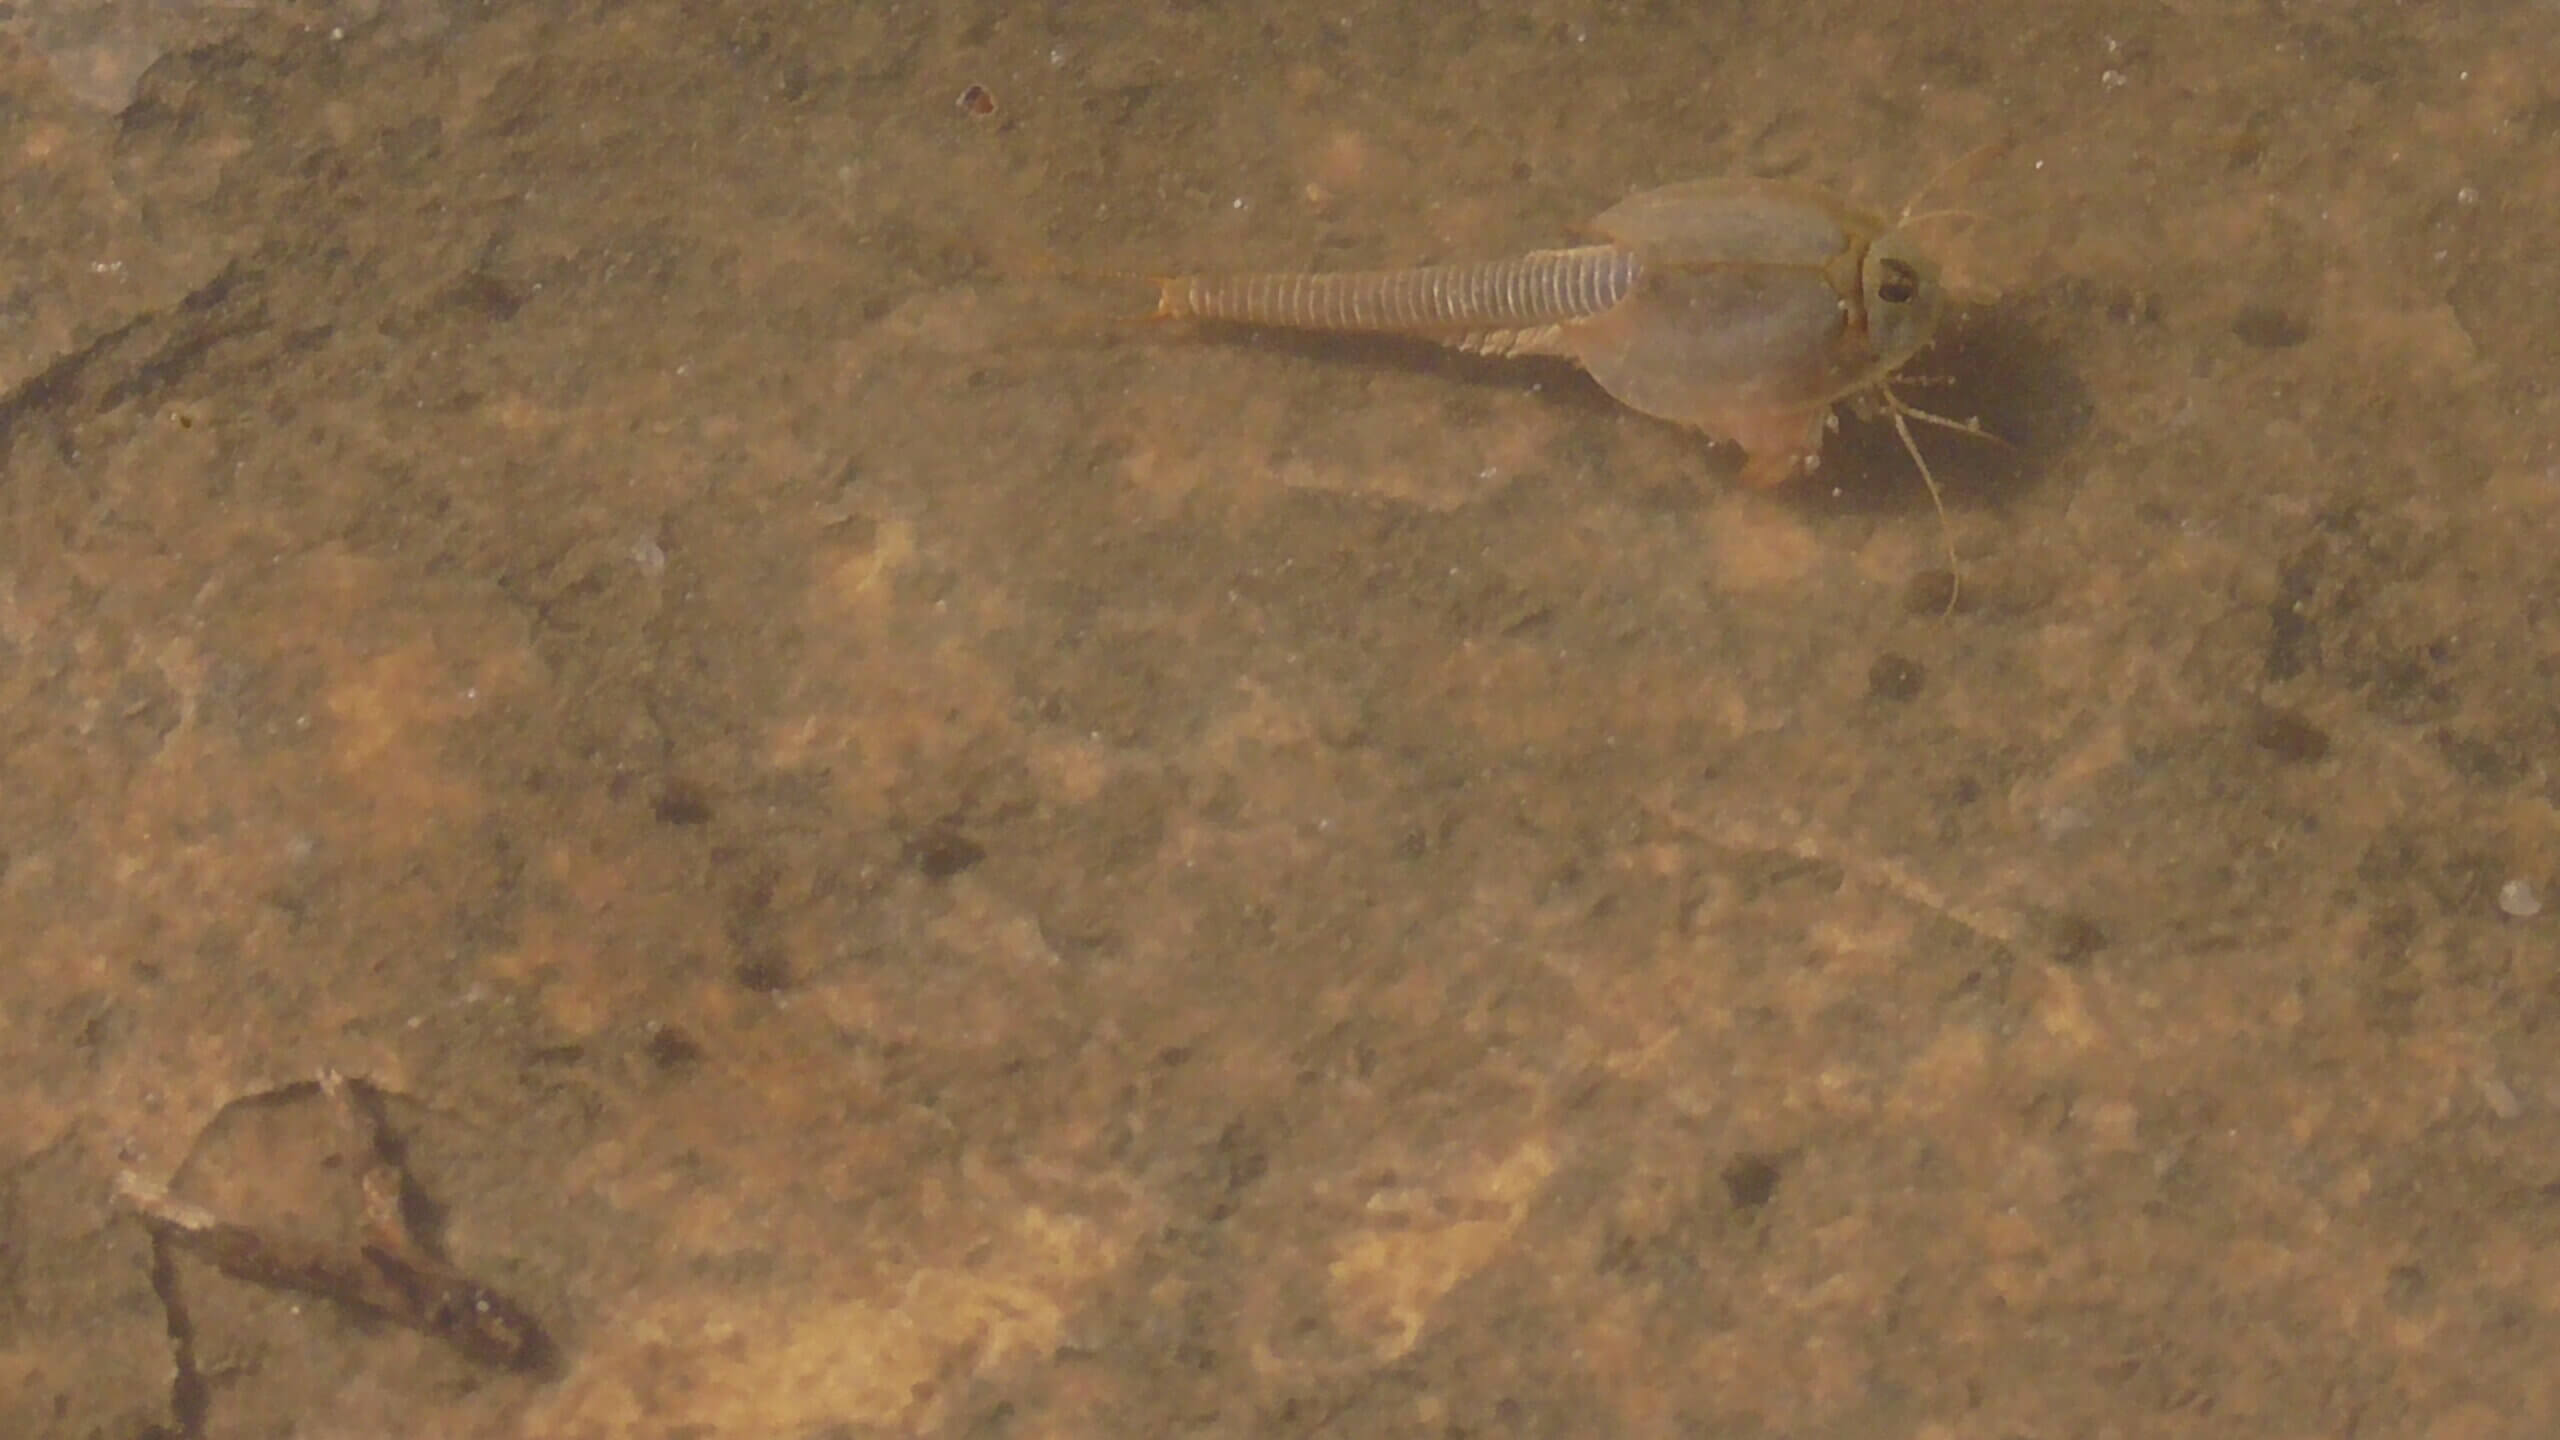 Tadpole shrimp at Pothole Point